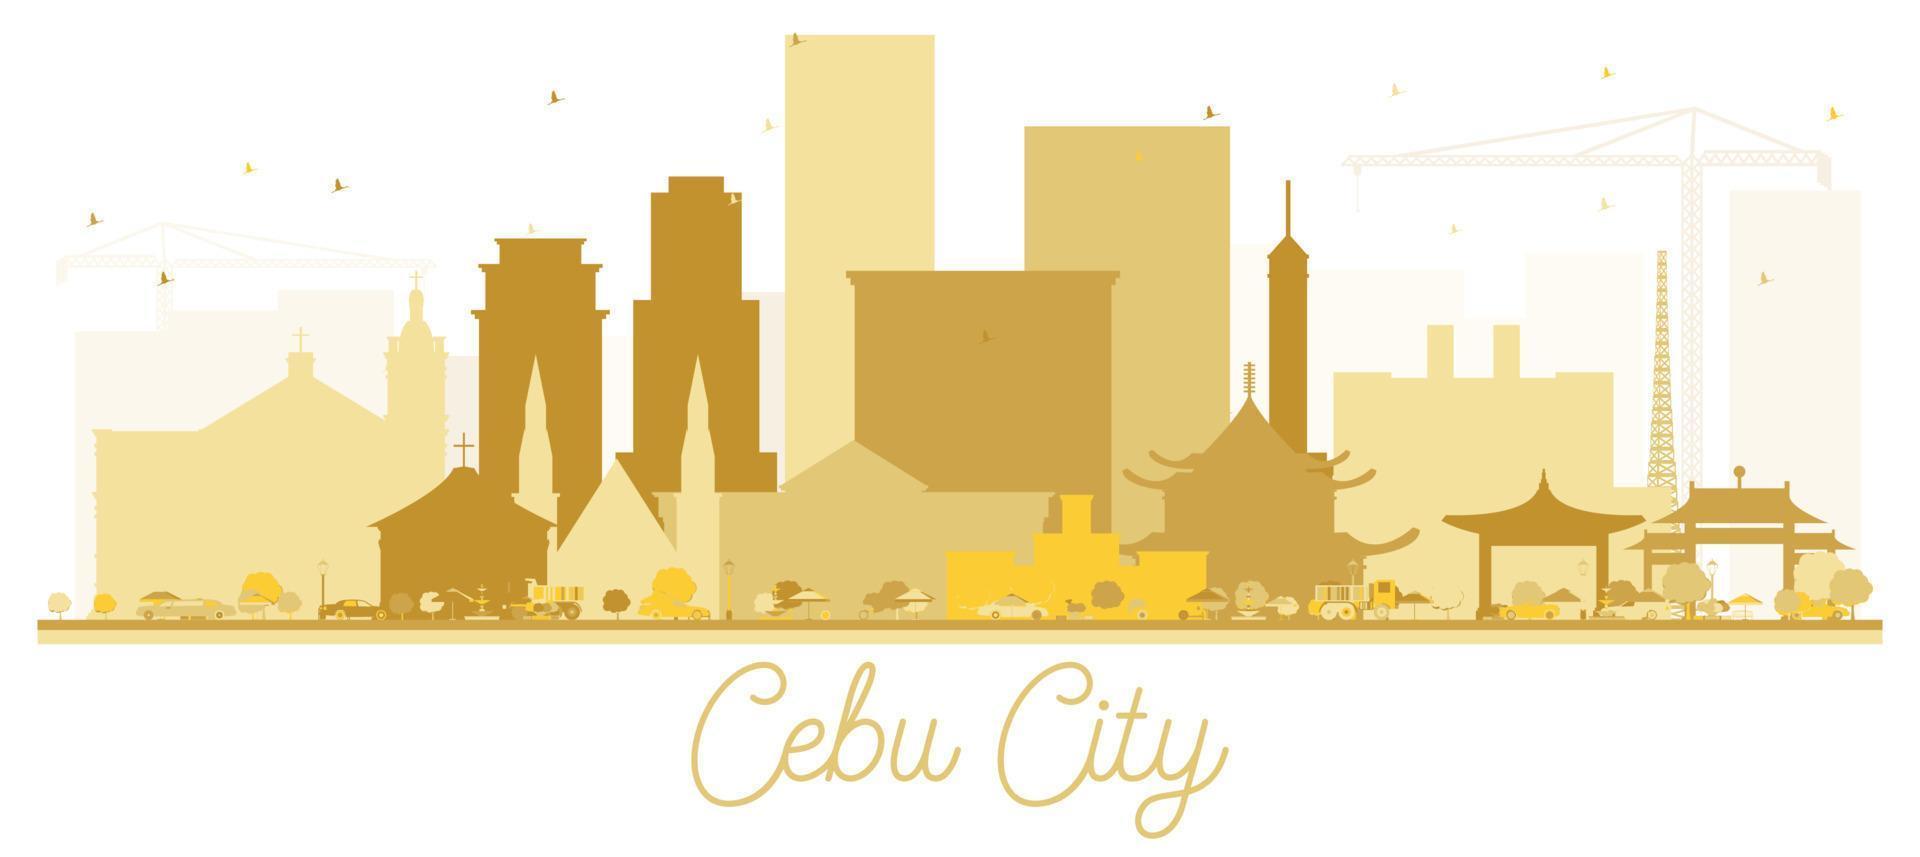 Cebu City skyline Golden silhouette. vector